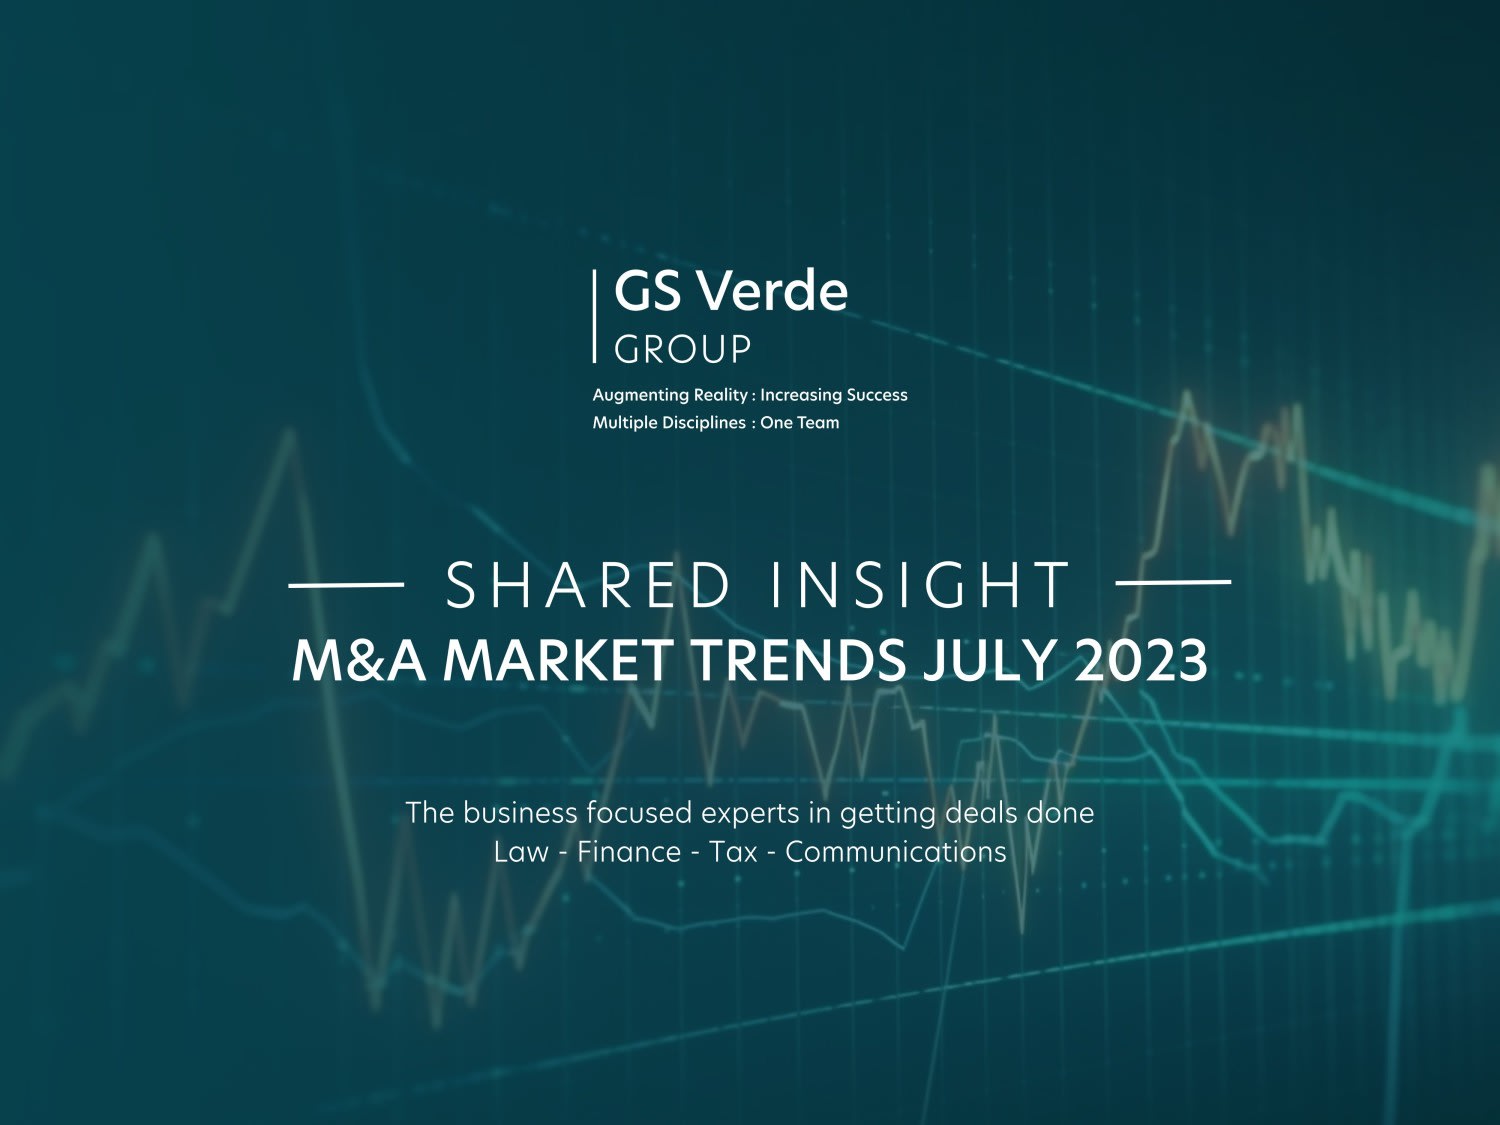 M&A Market Trends July 2023